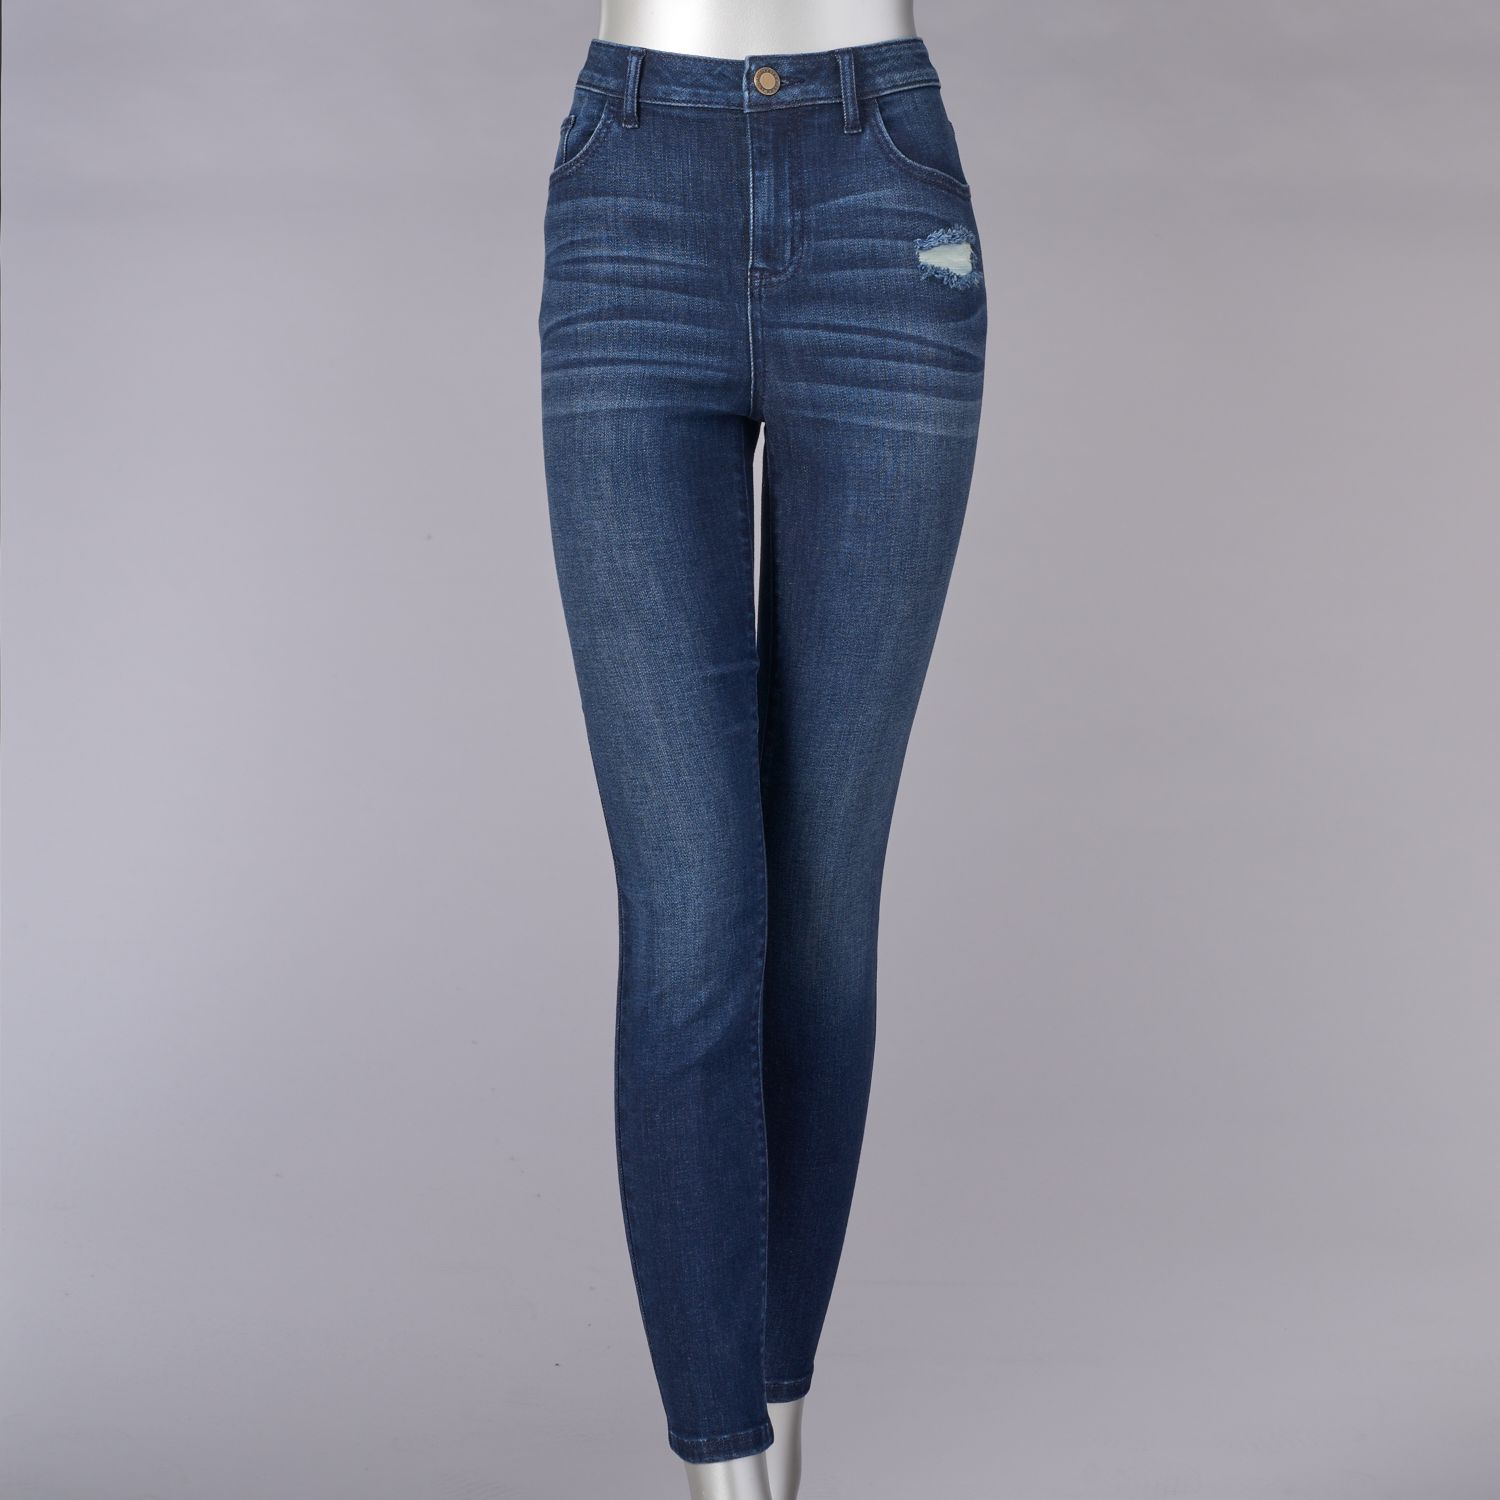 simply vera wang skinny jeans